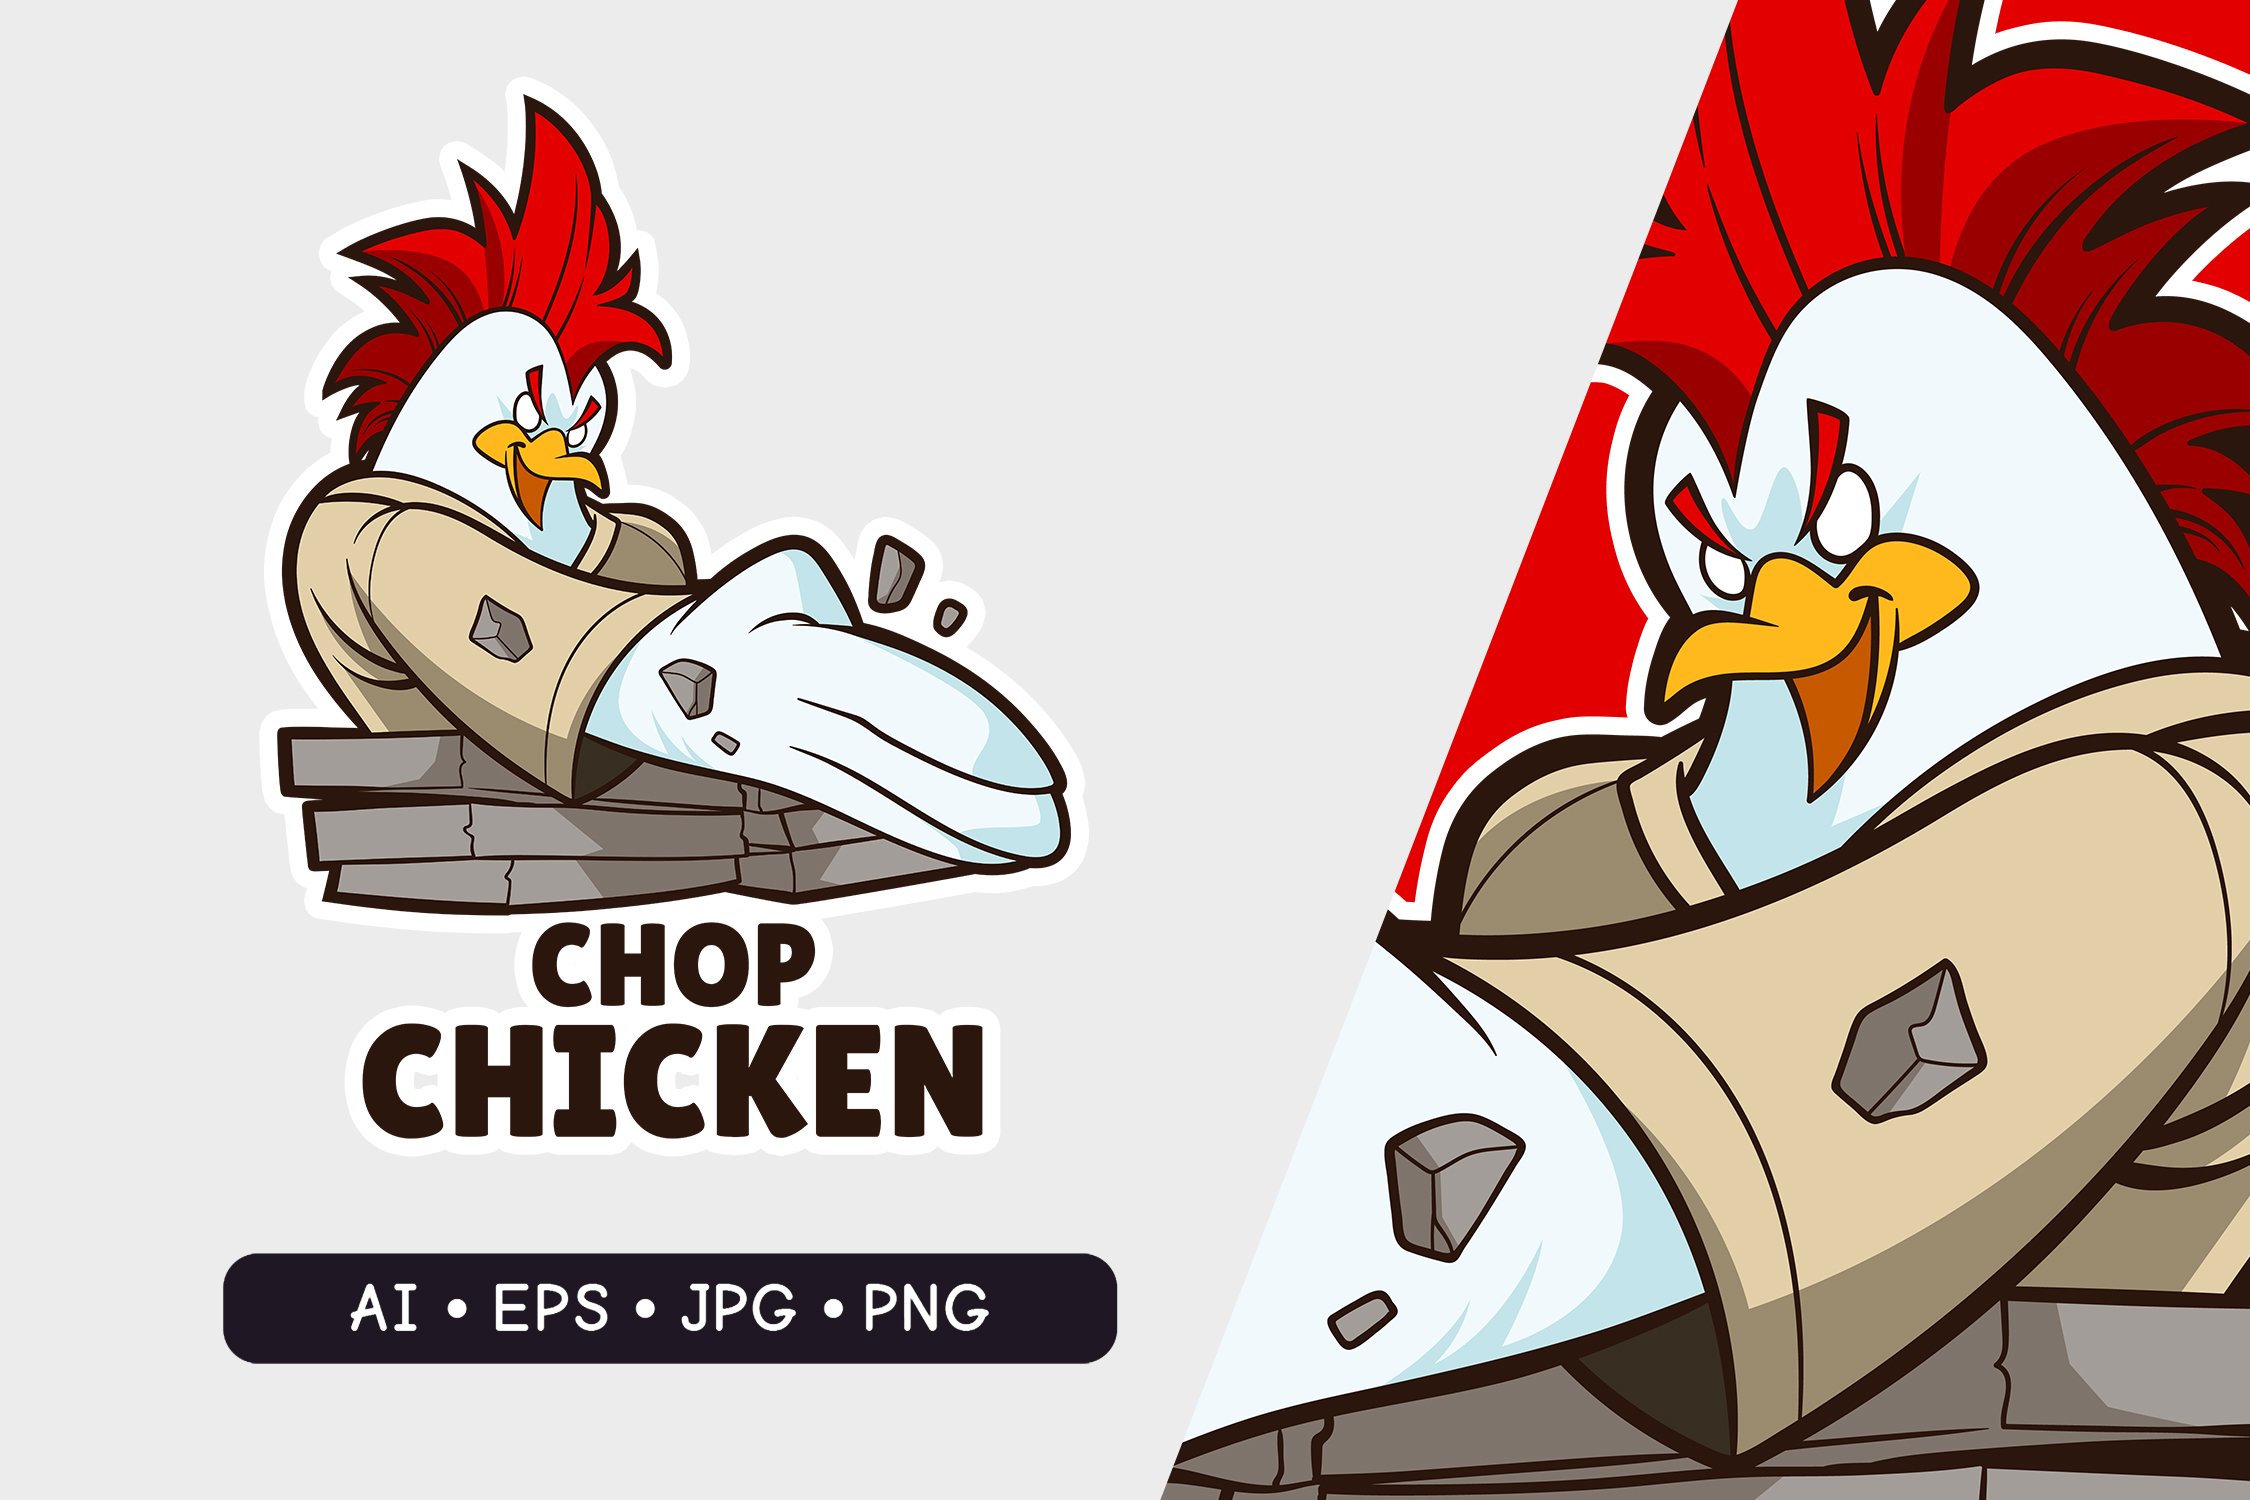 Chopchicken - Mascot Logo cover image.